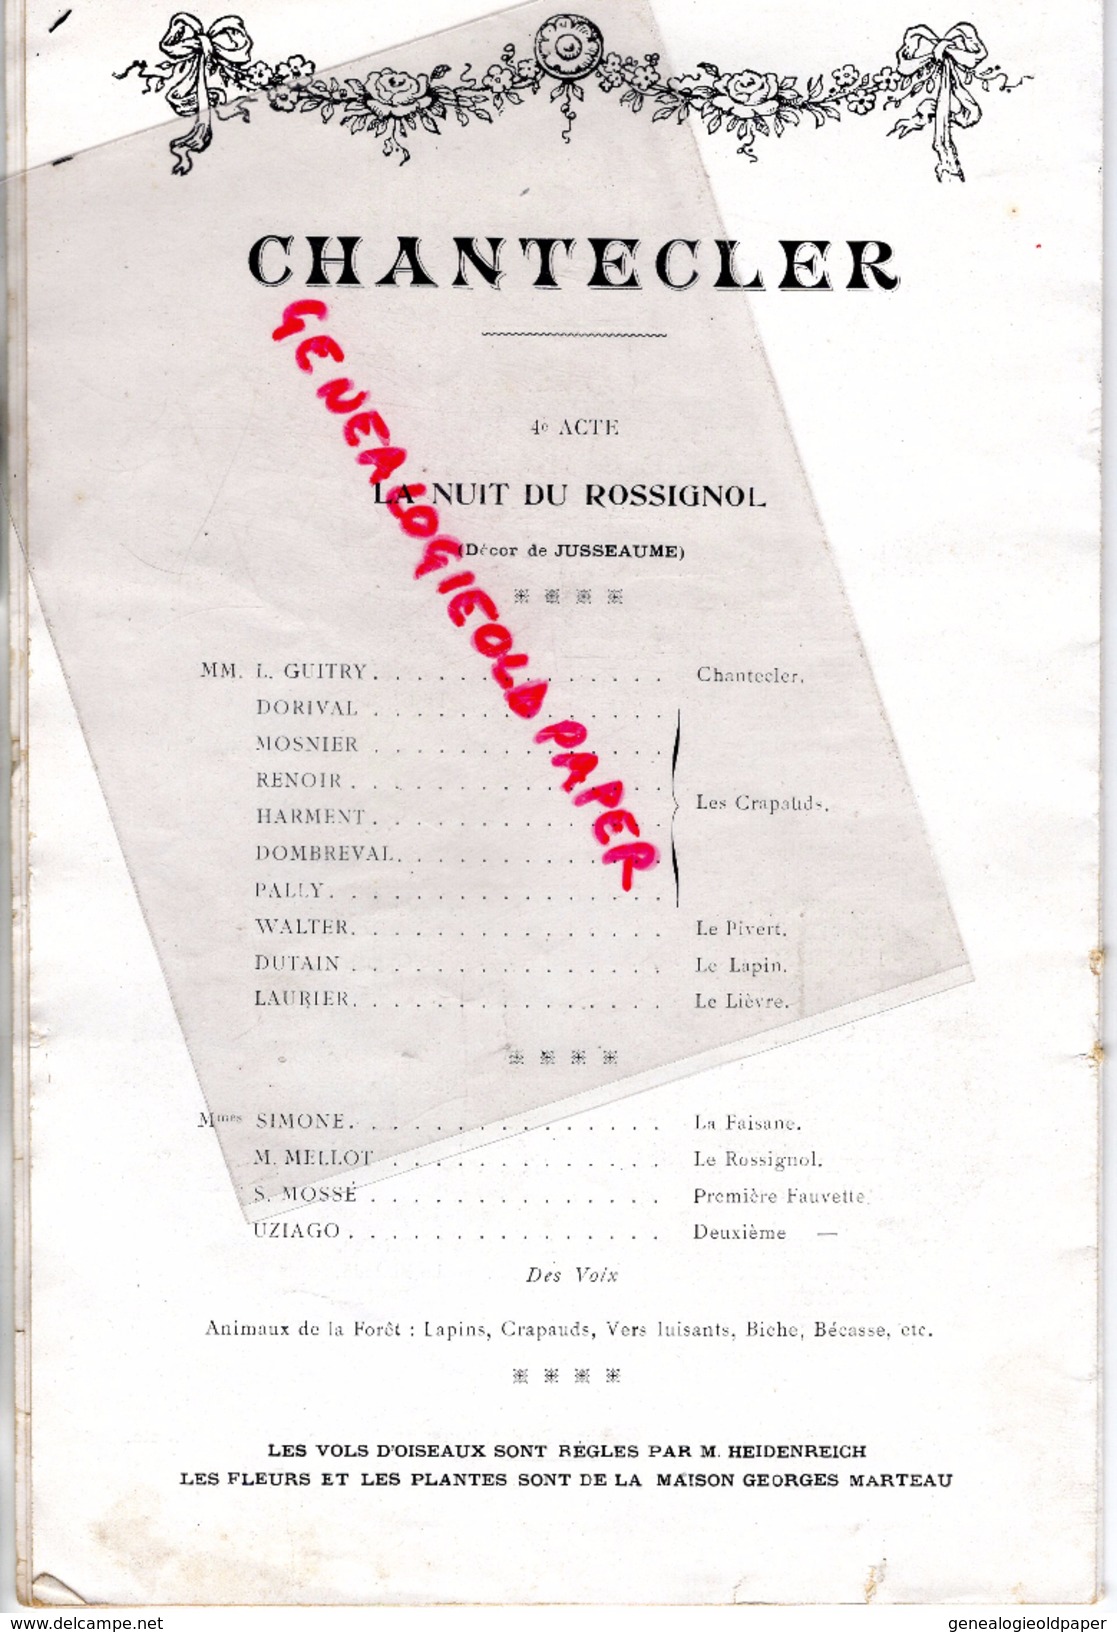 75 - PARIS - PROGRAMME CHANTECLER- EDMOND ROSTAND-THEATRE PORTE SAINT MARTIN-HERTZ-COQUELIN-GUITRY-SIMONE-GALIPAUX-